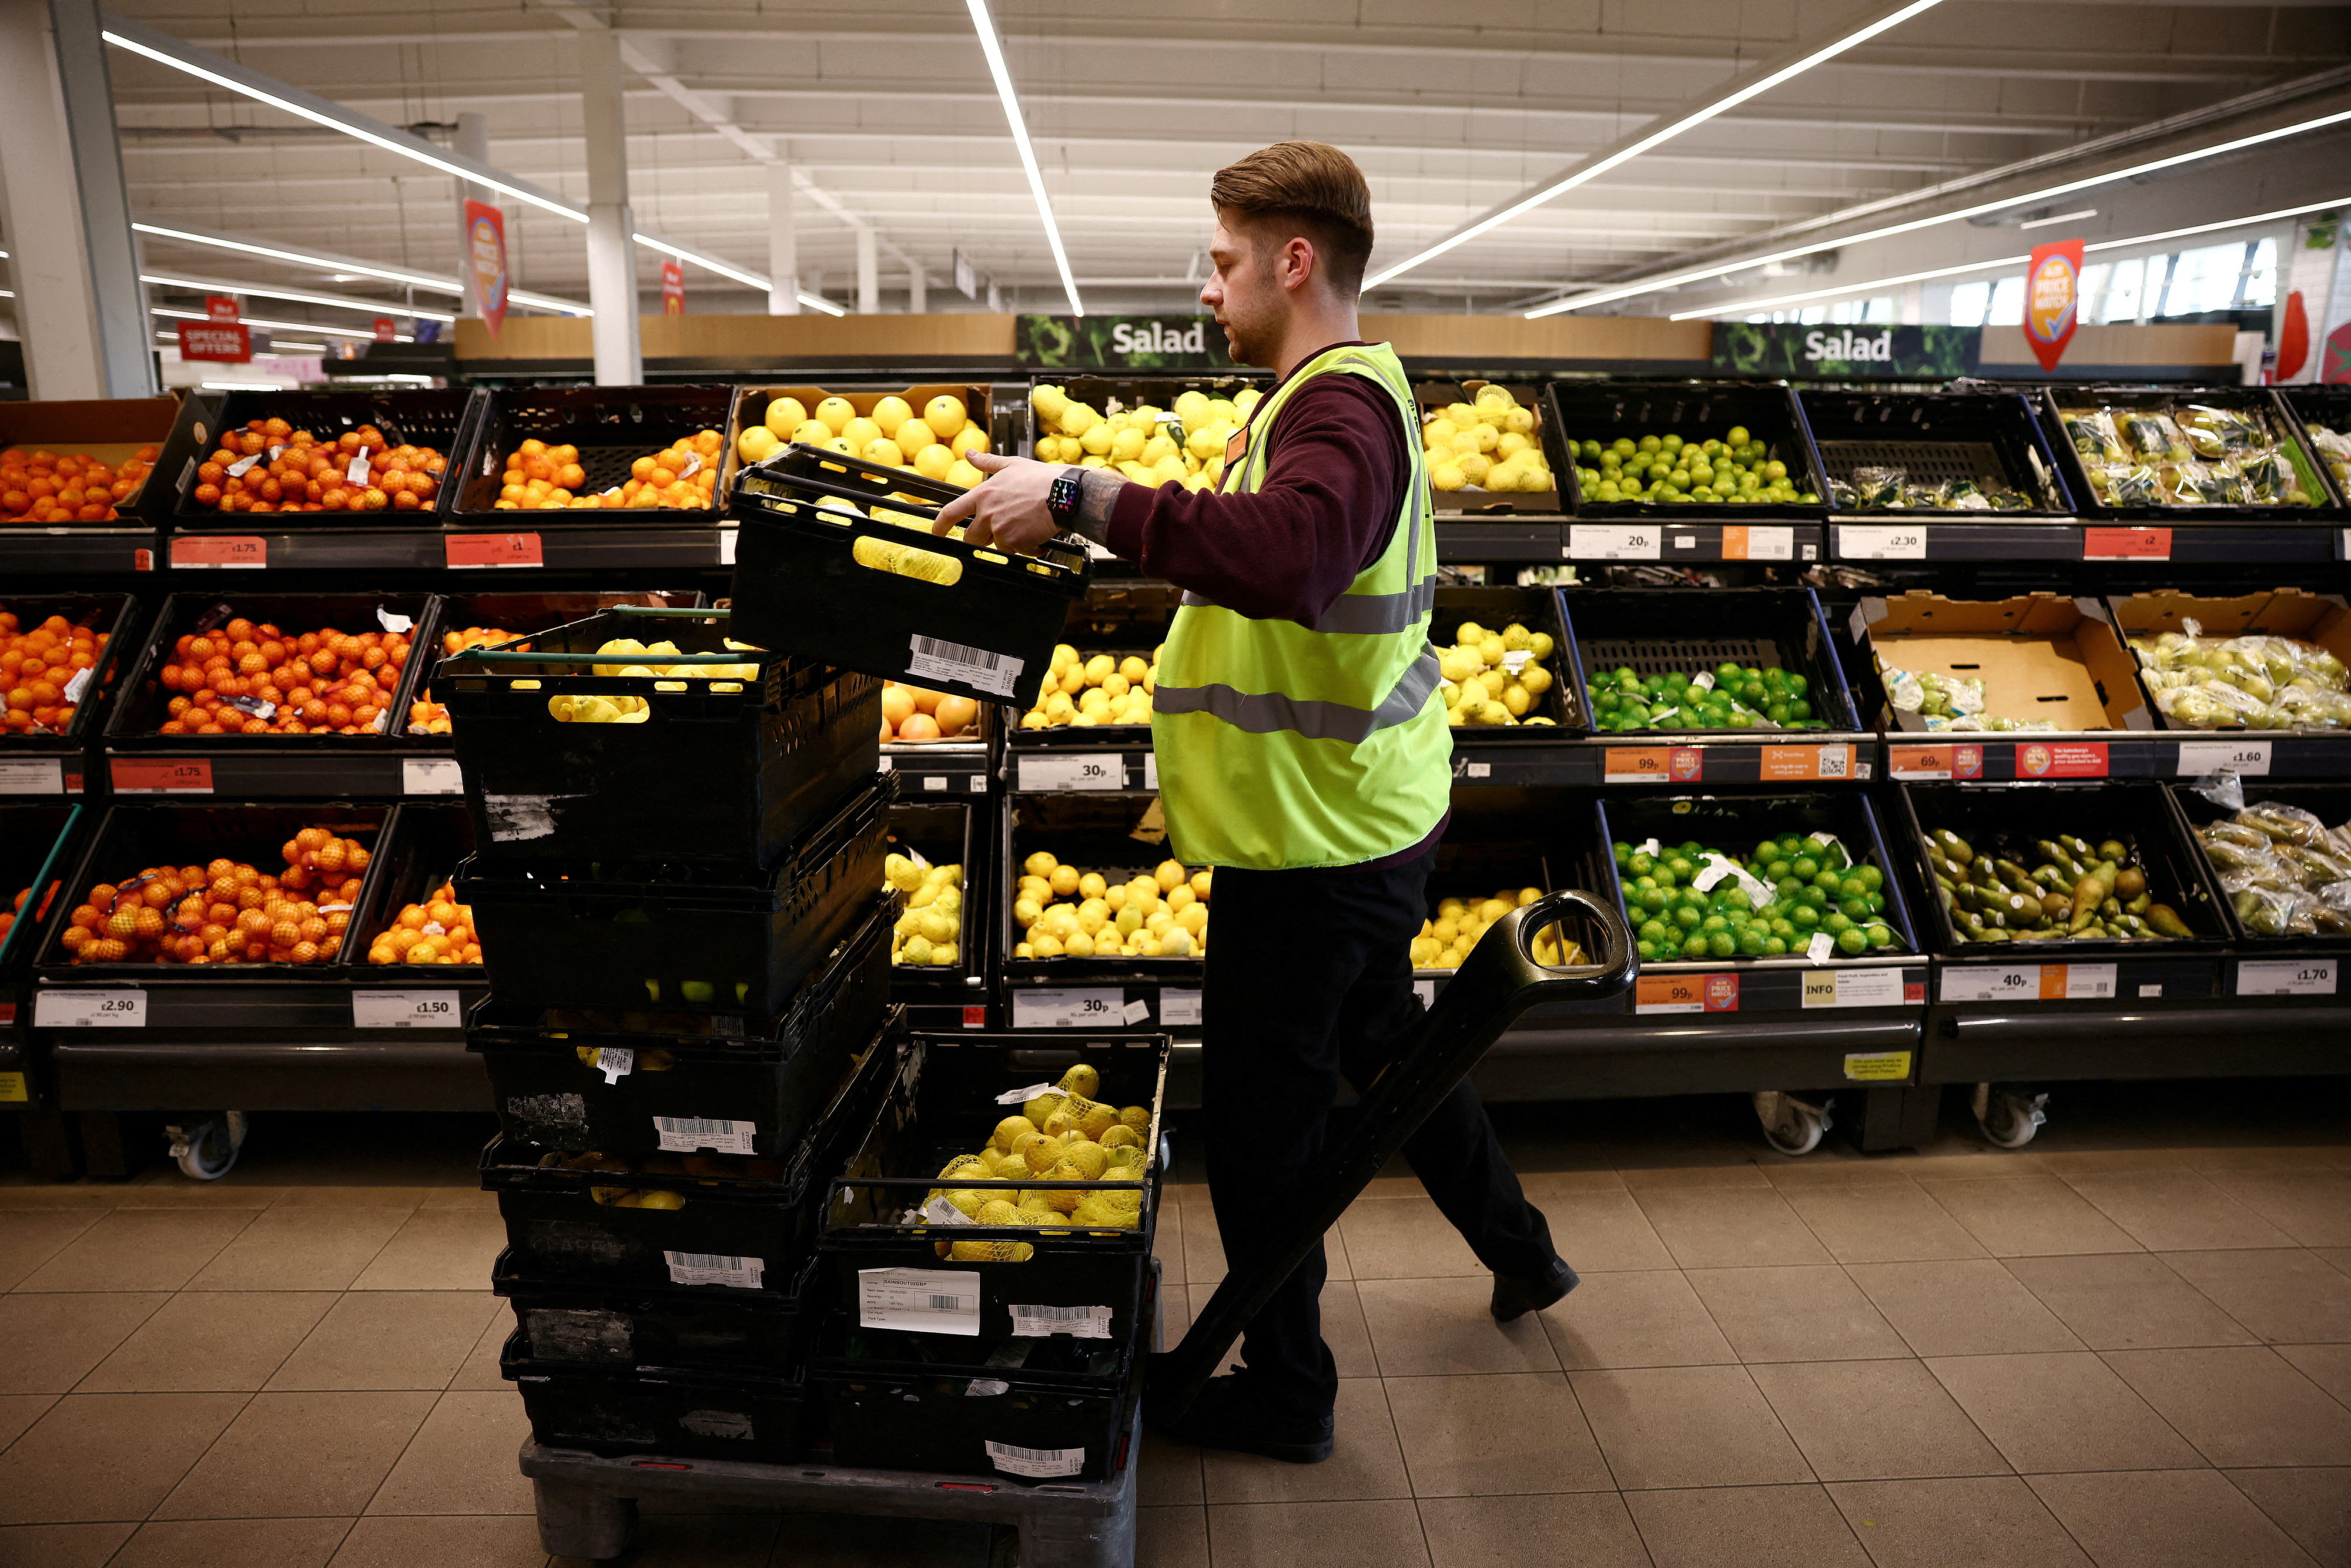 An employee arranges produce inside a Sainsbury’s supermarket in Richmond, west London